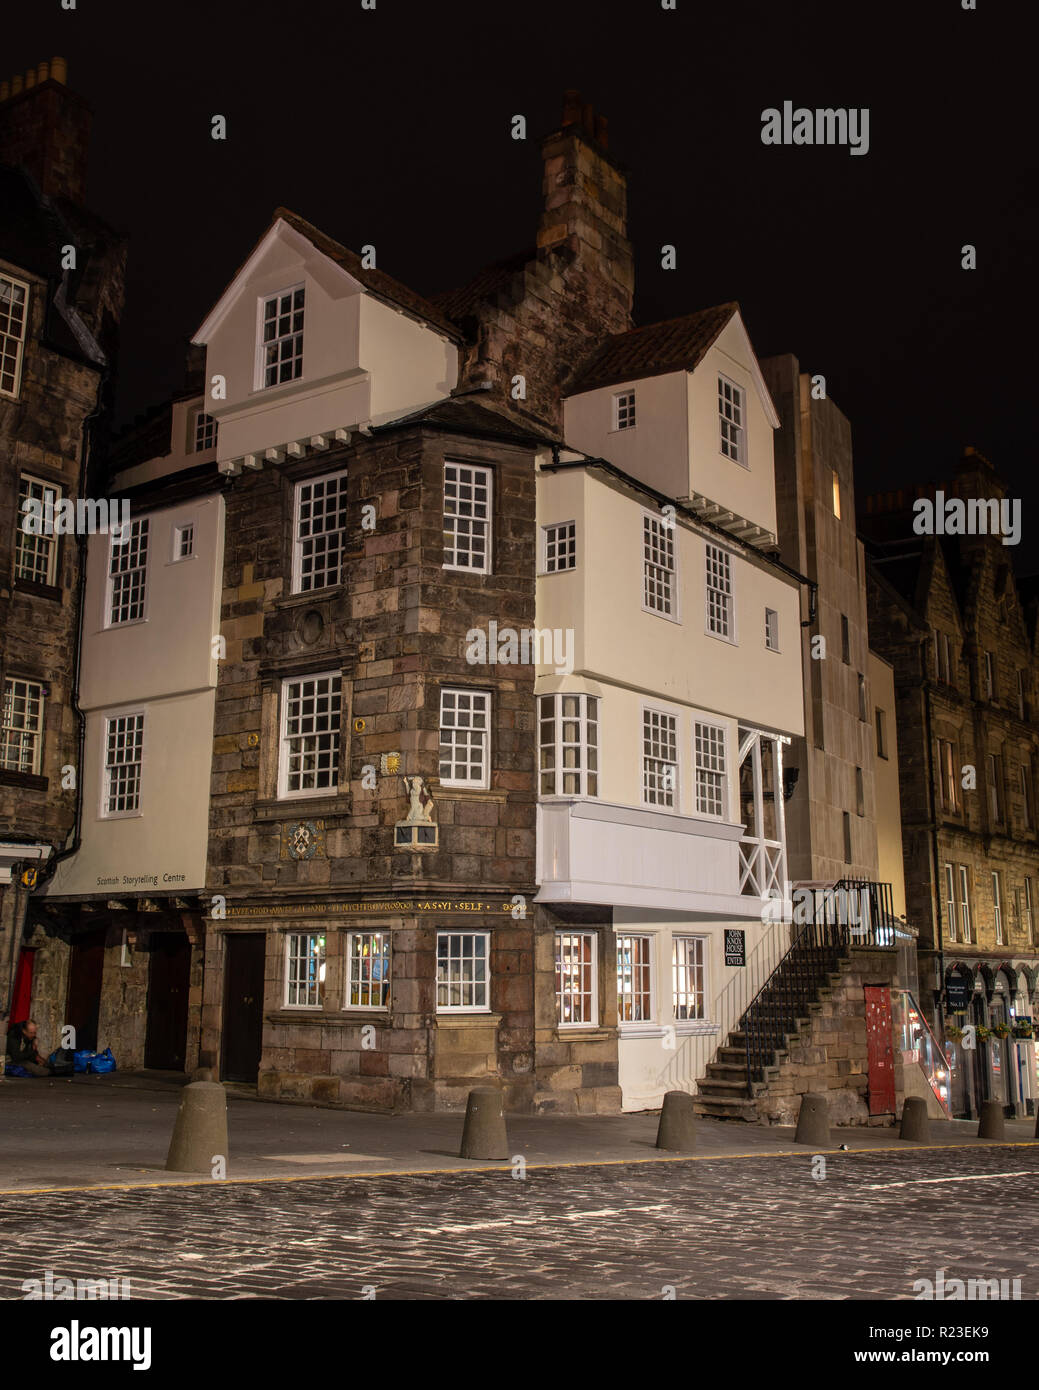 Edinburgh, Scotland, UK - November 2, 2018: The old stone house of 16th Century religious reformer John Knox is lit at night on Edinburgh's Royal Mile Stock Photo